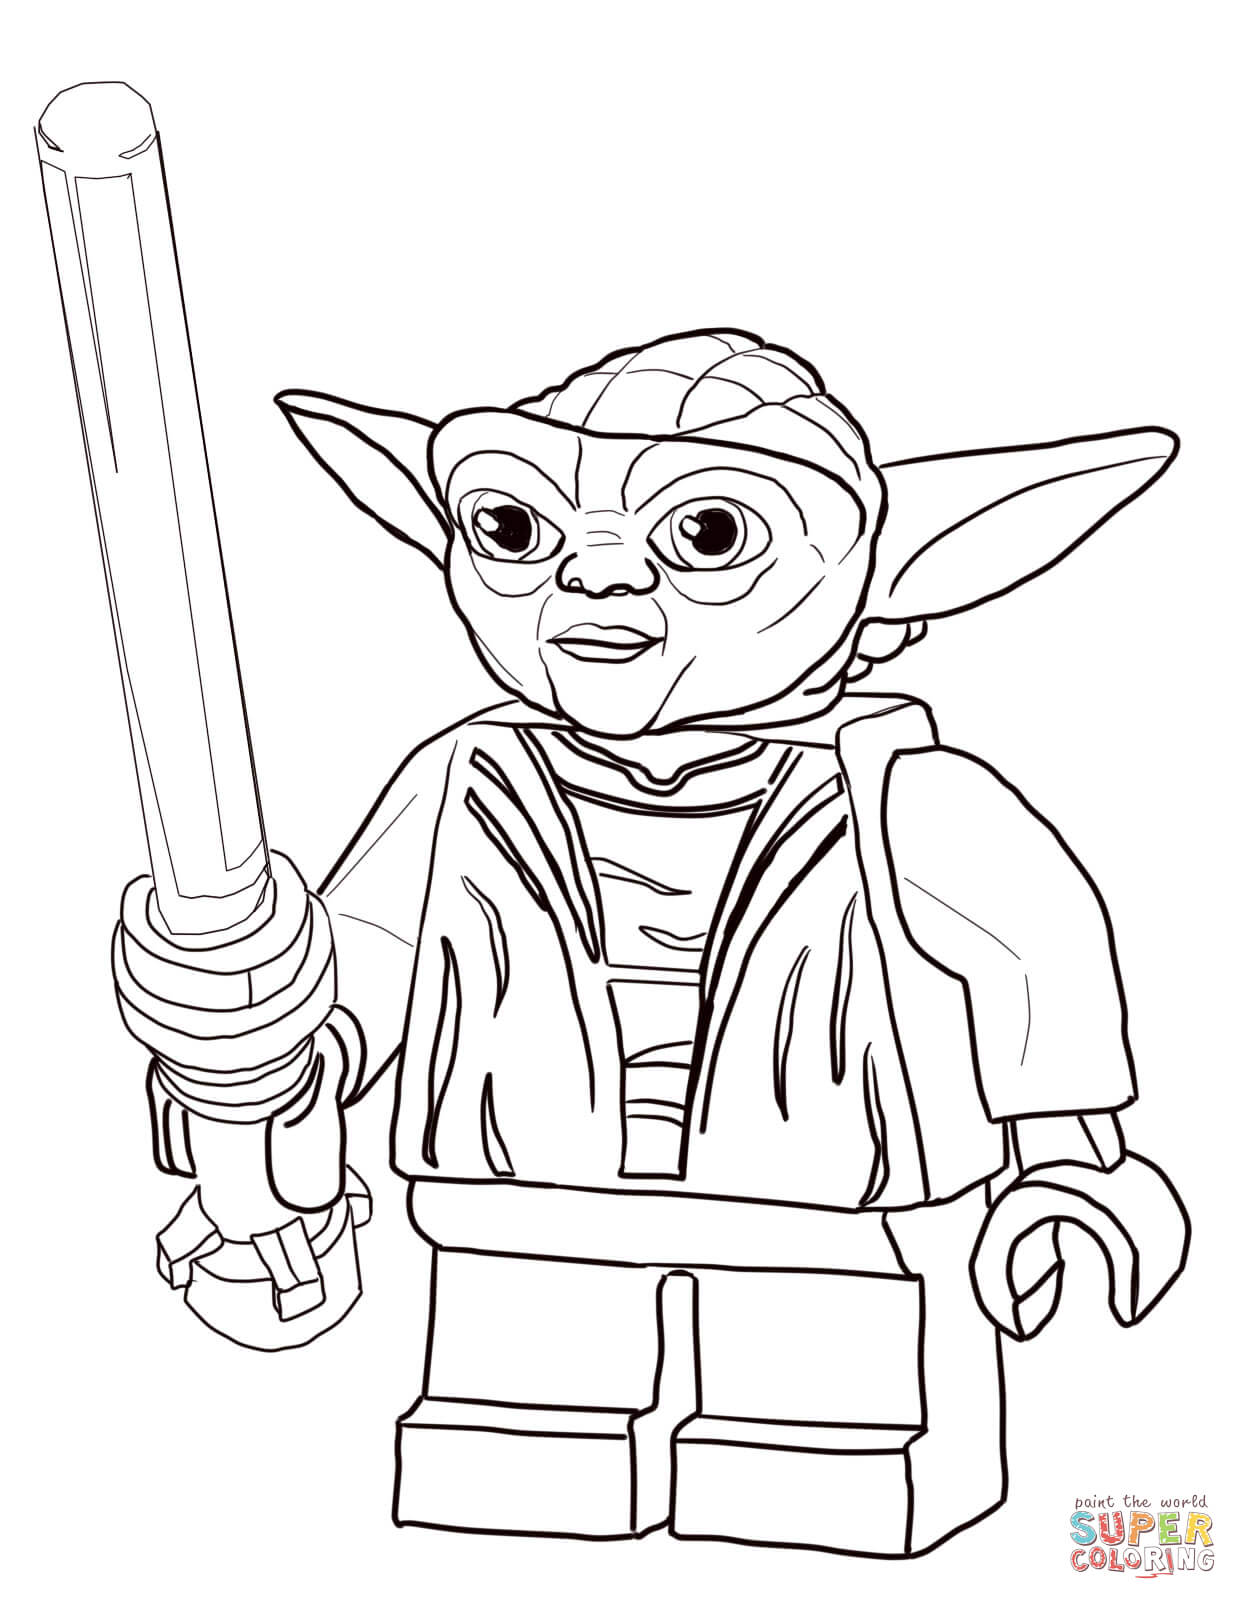 Lego Star Wars Master Yoda coloring page | Free Printable Coloring ...